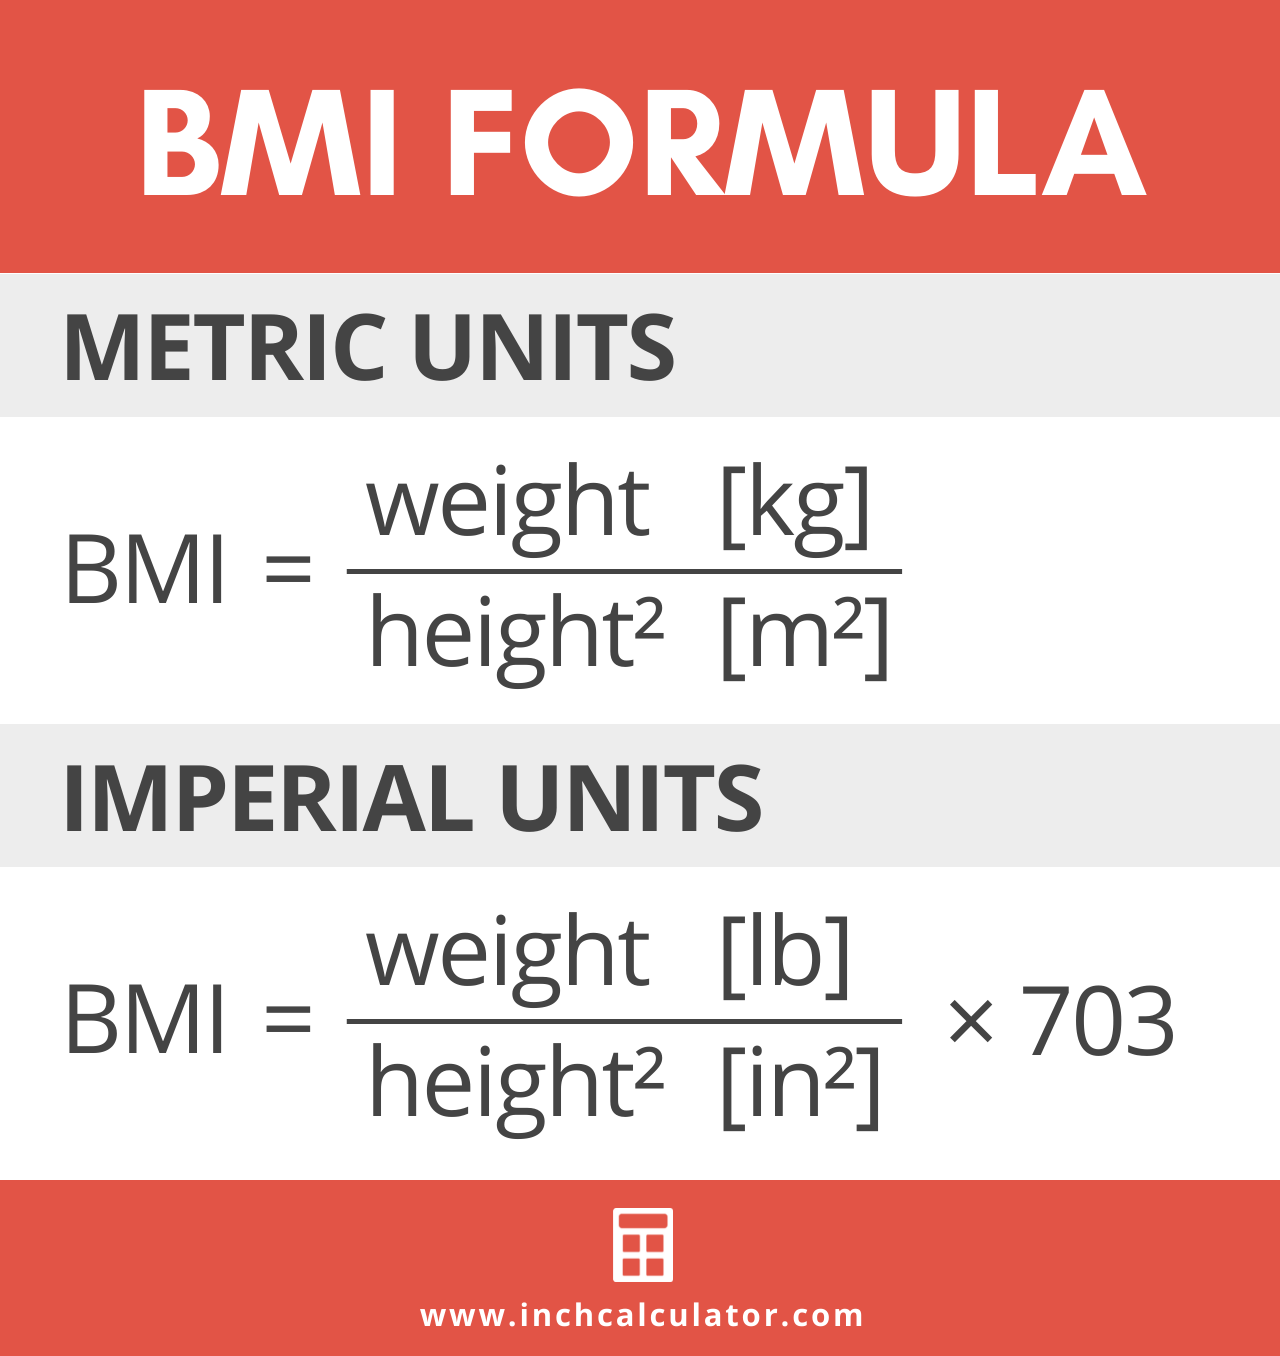 bmi calculator for women metric